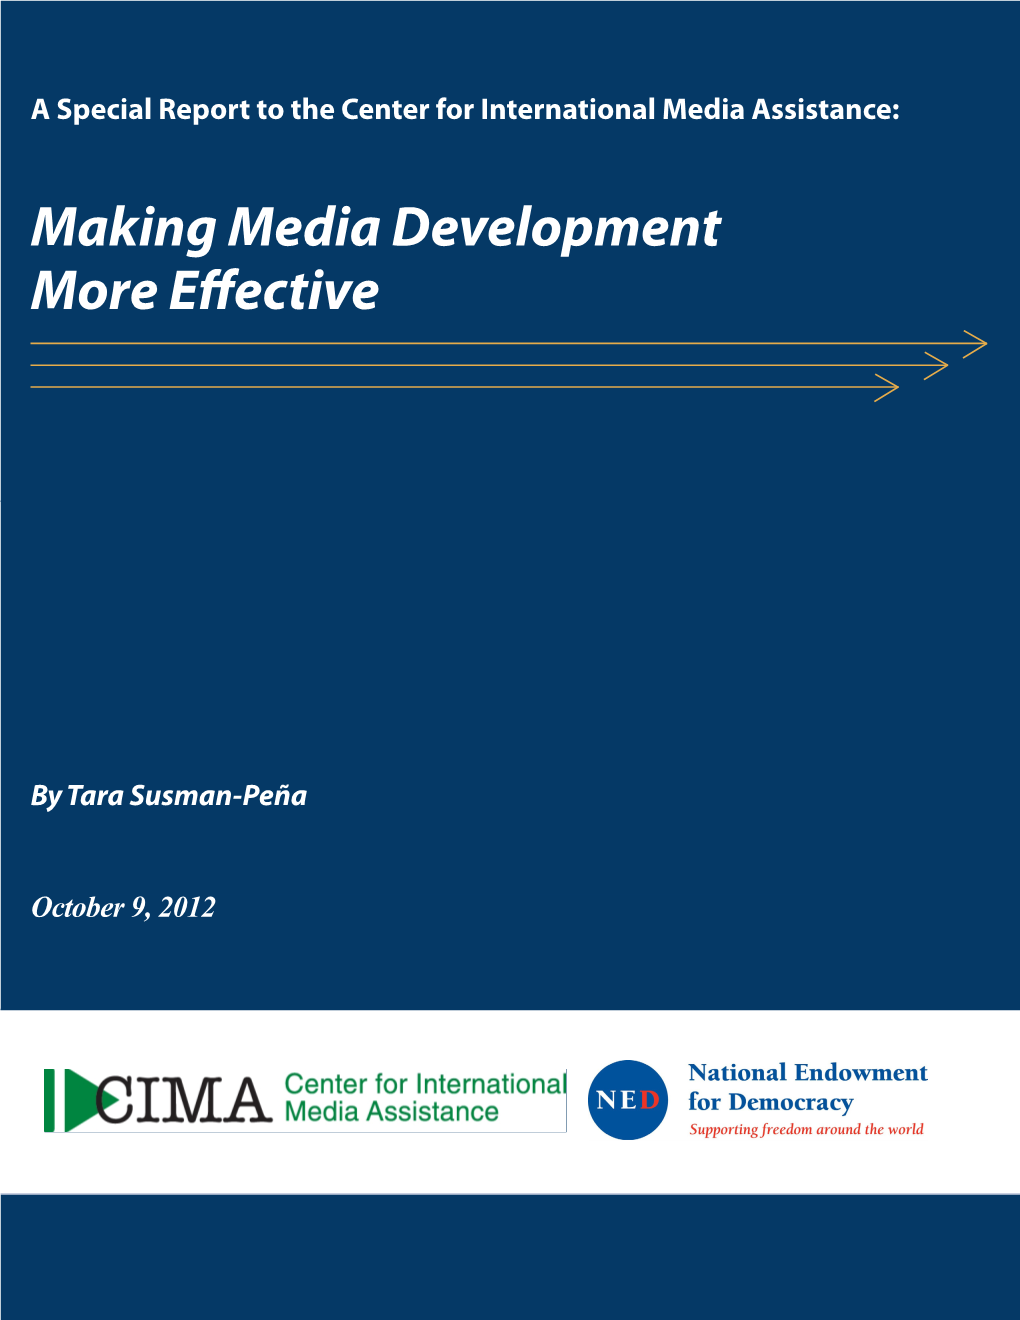 Making Media Development More Effective